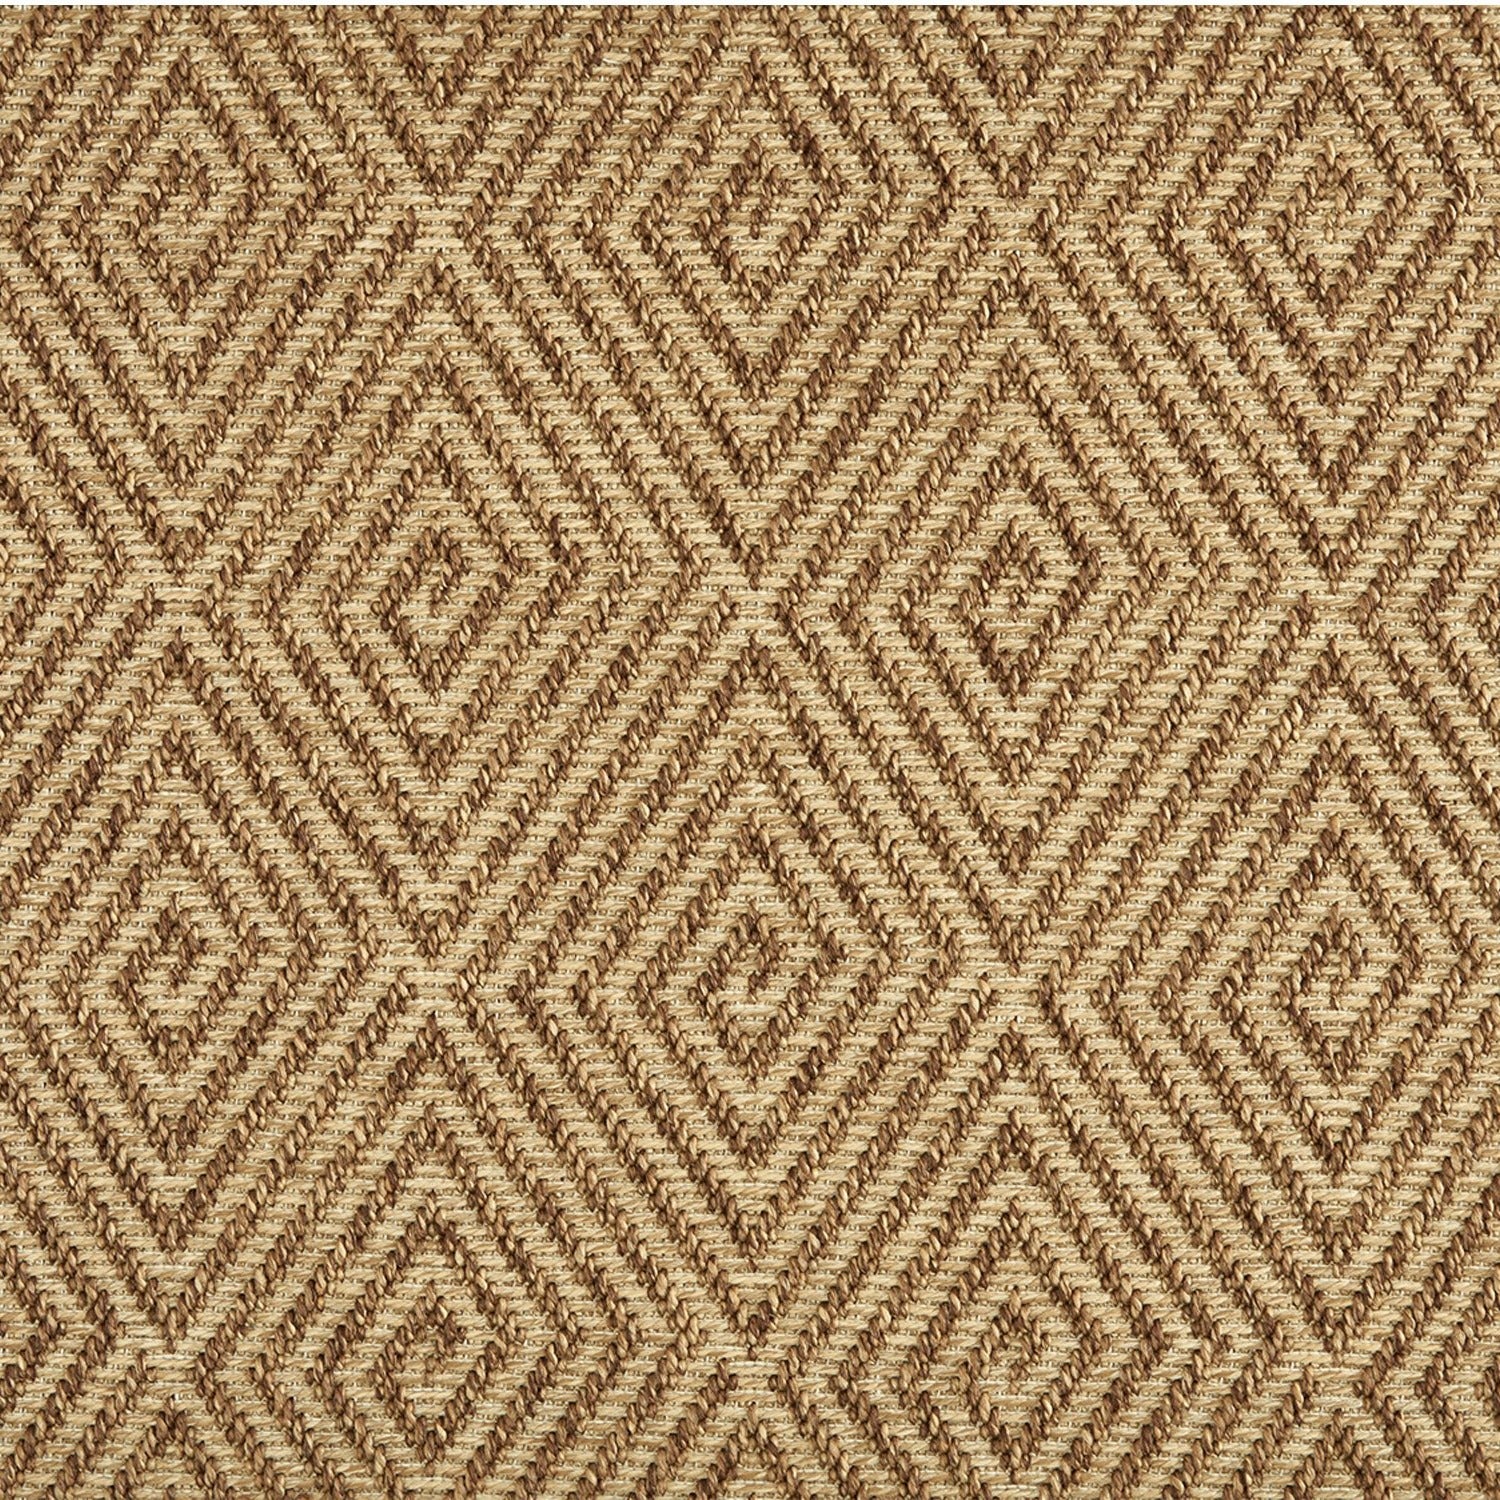 Outdoor broadloom carpet swatch in a dense repeating diamond pattern in brown on a tan field.